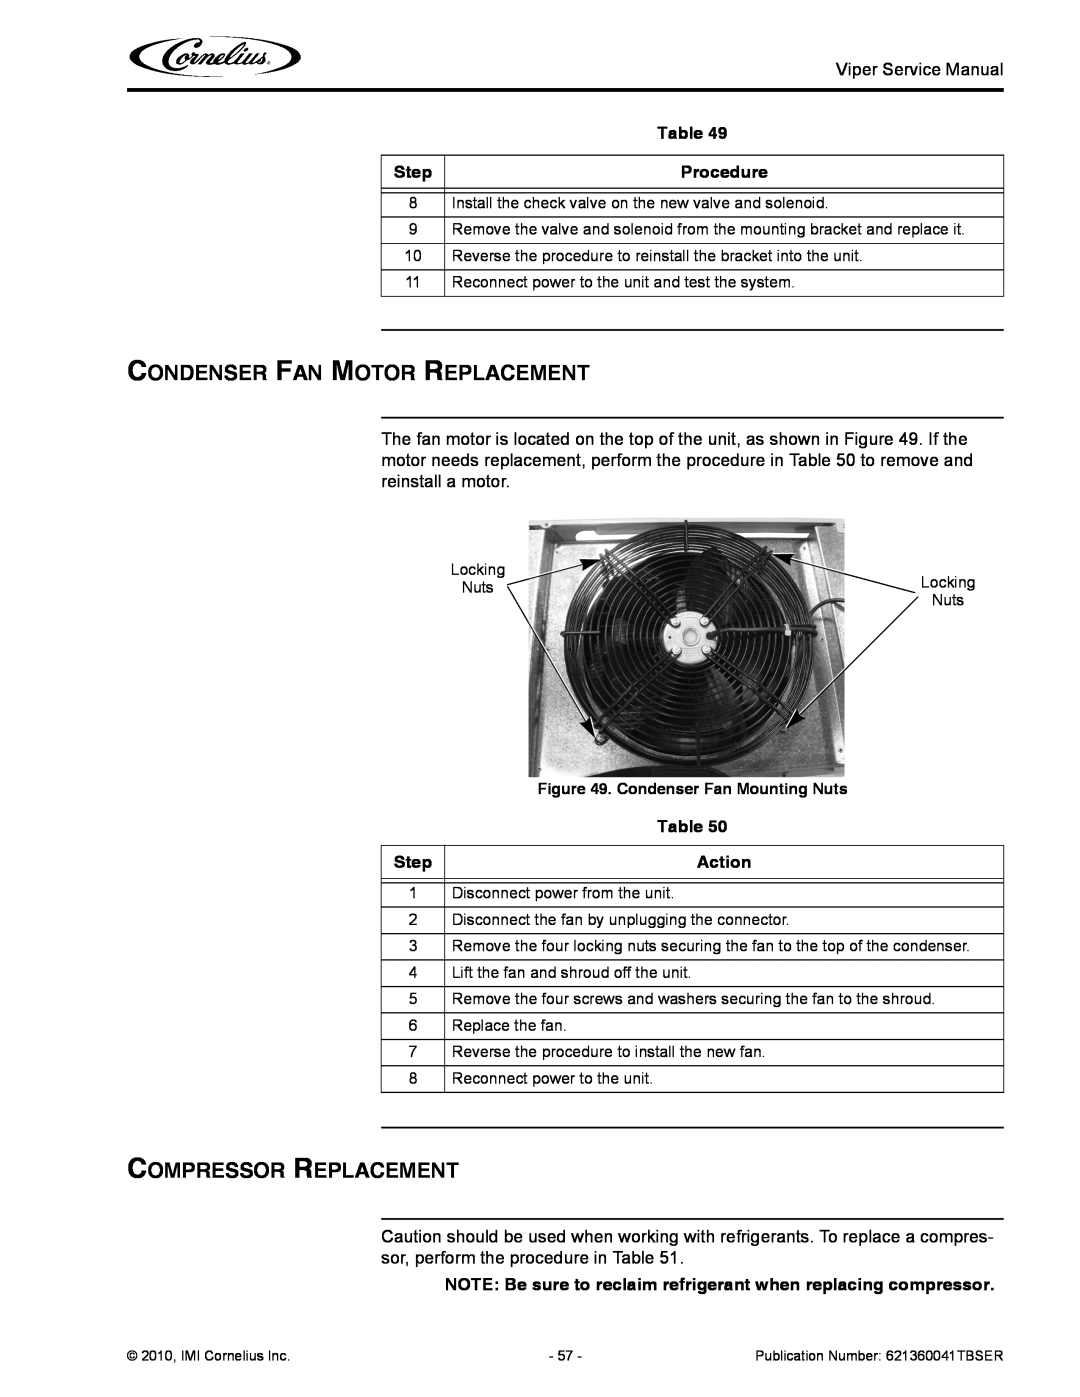 Cornelius 3 service manual Condenser Fan Motor Replacement, Compressor Replacement, Step, Procedure, Action 